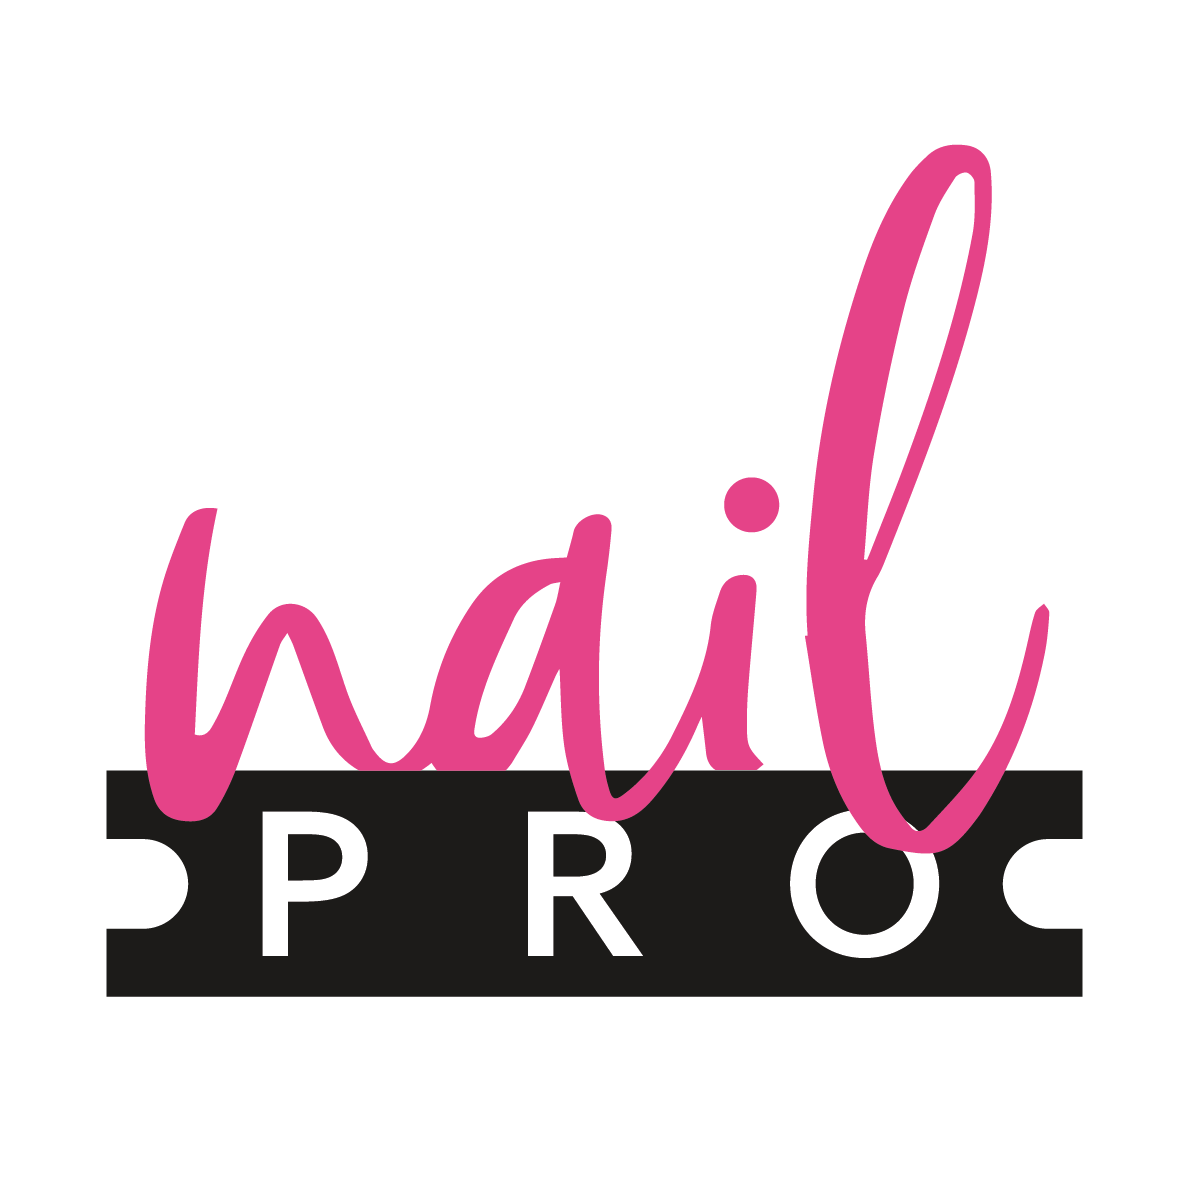 Nail Pro